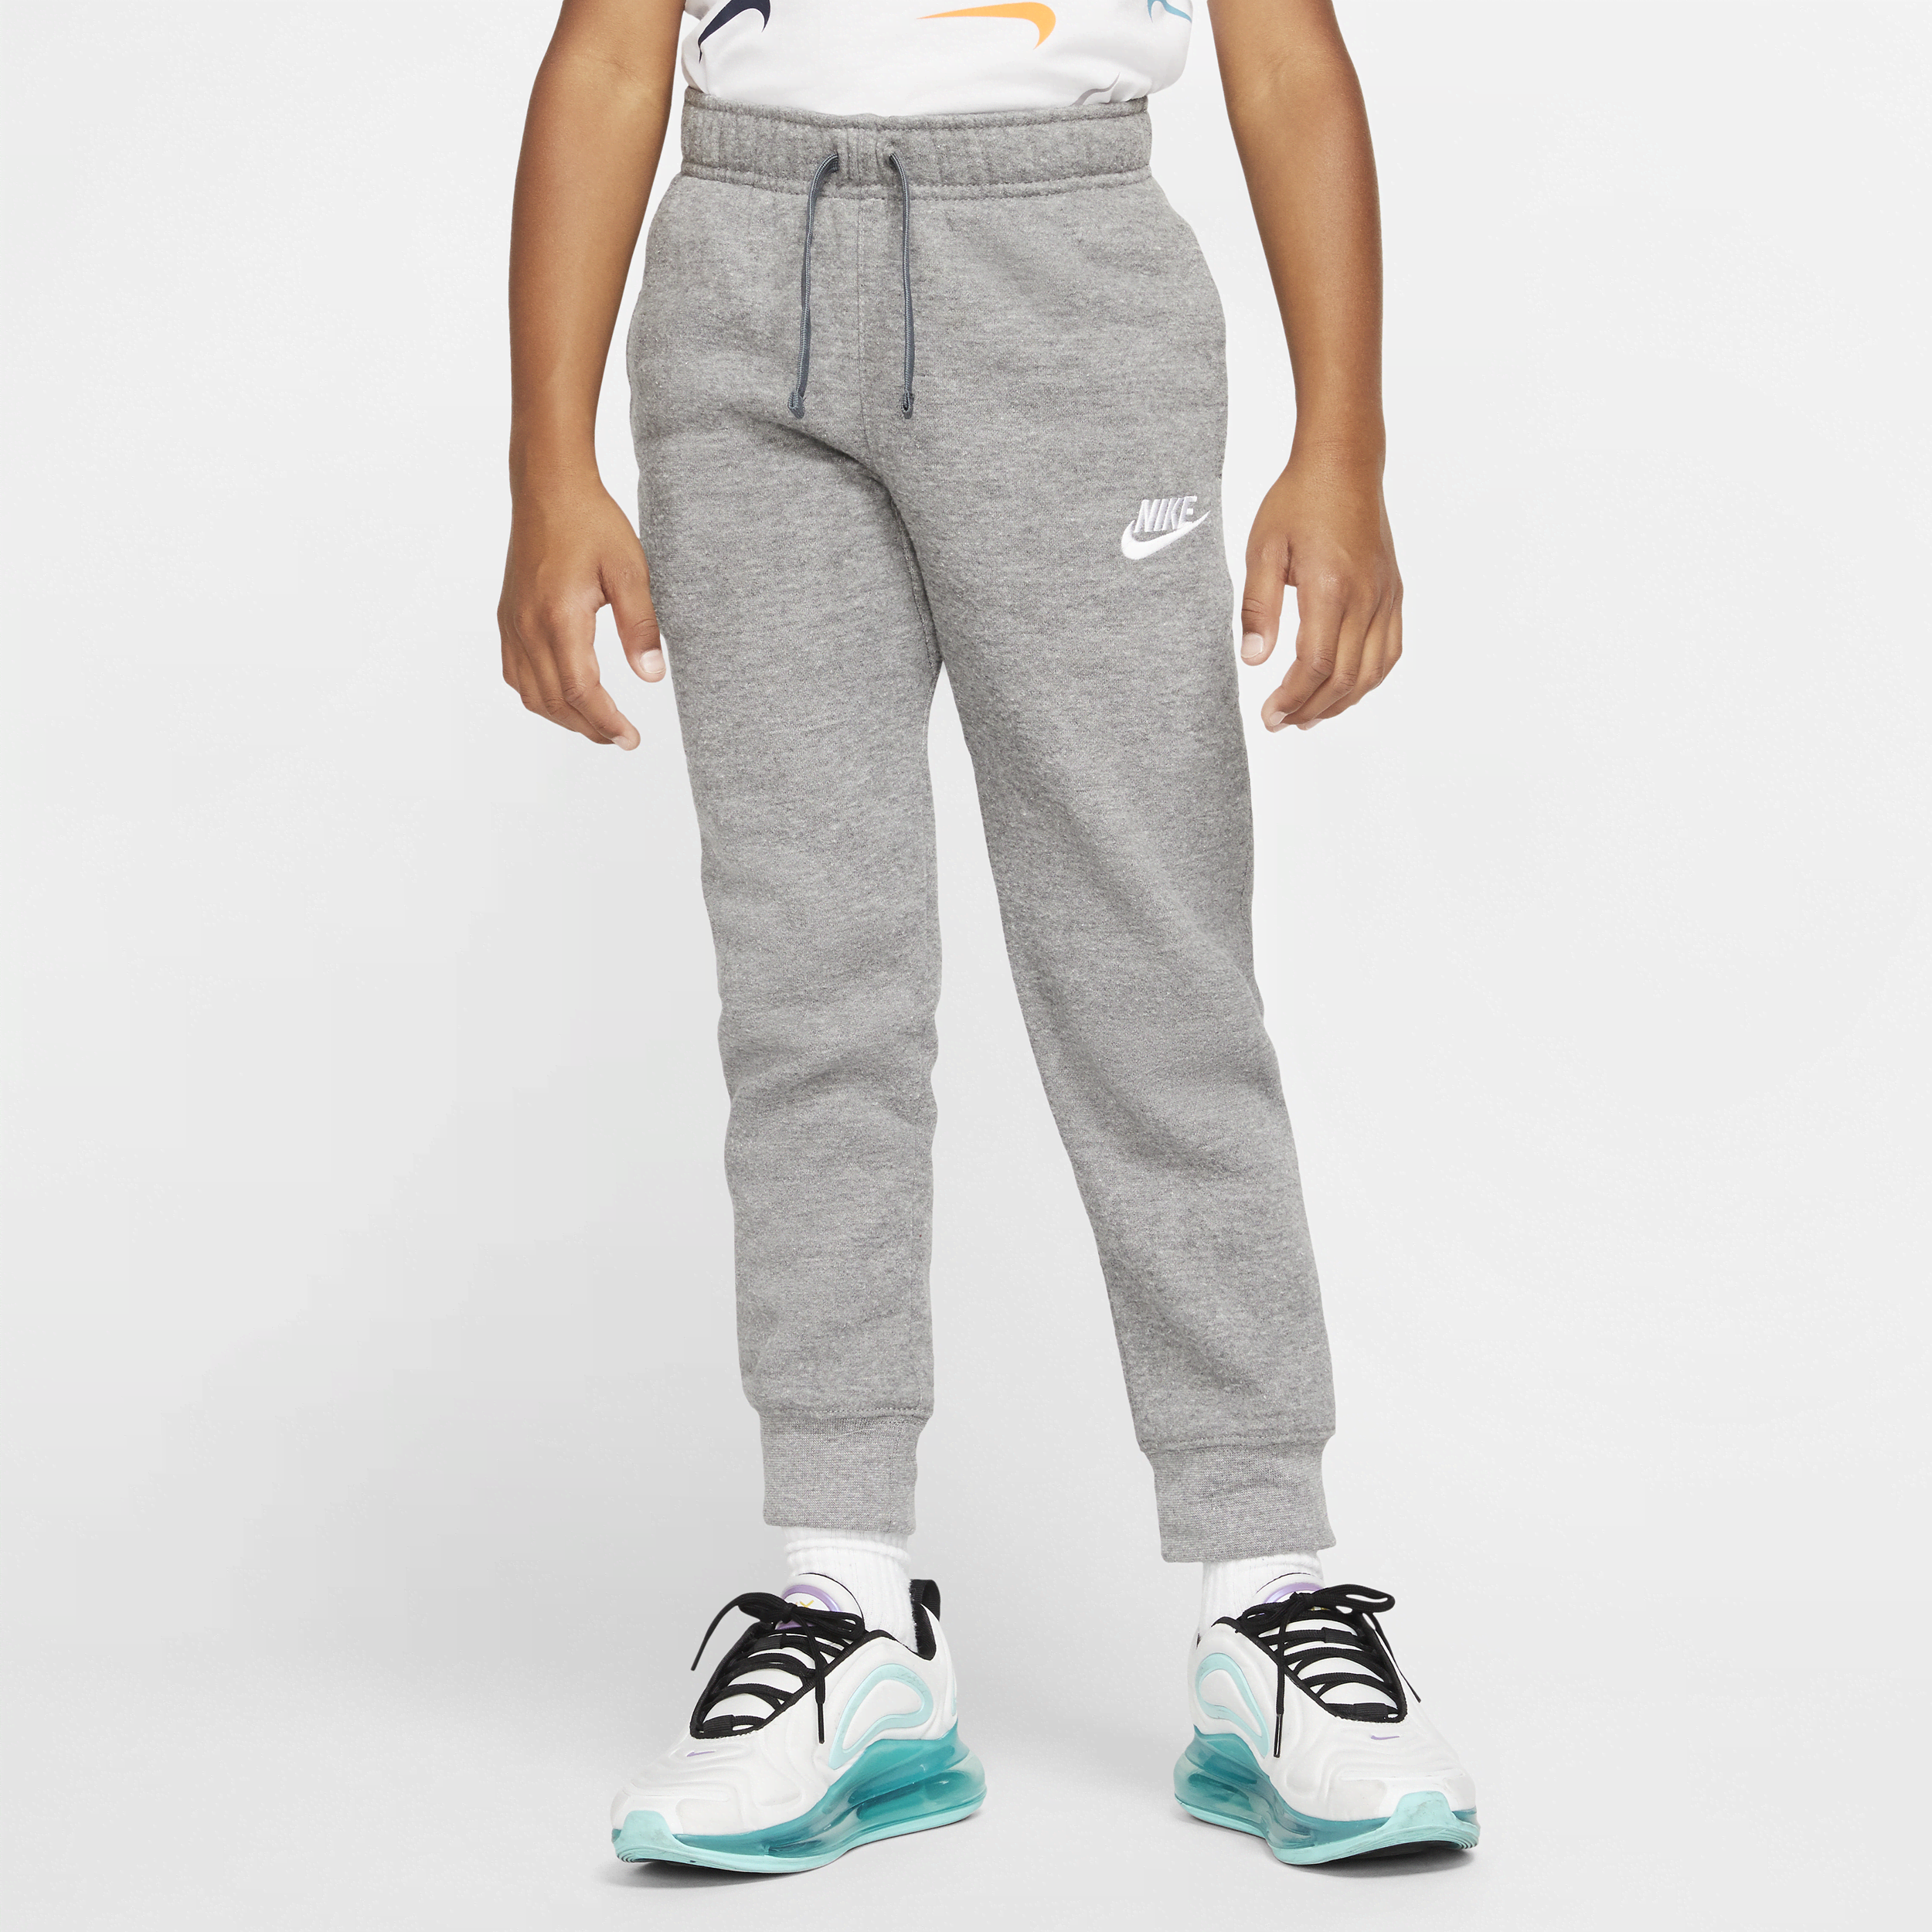 Pantaloni Nike Sportswear Club Fleece - Bambino/a - Grigio